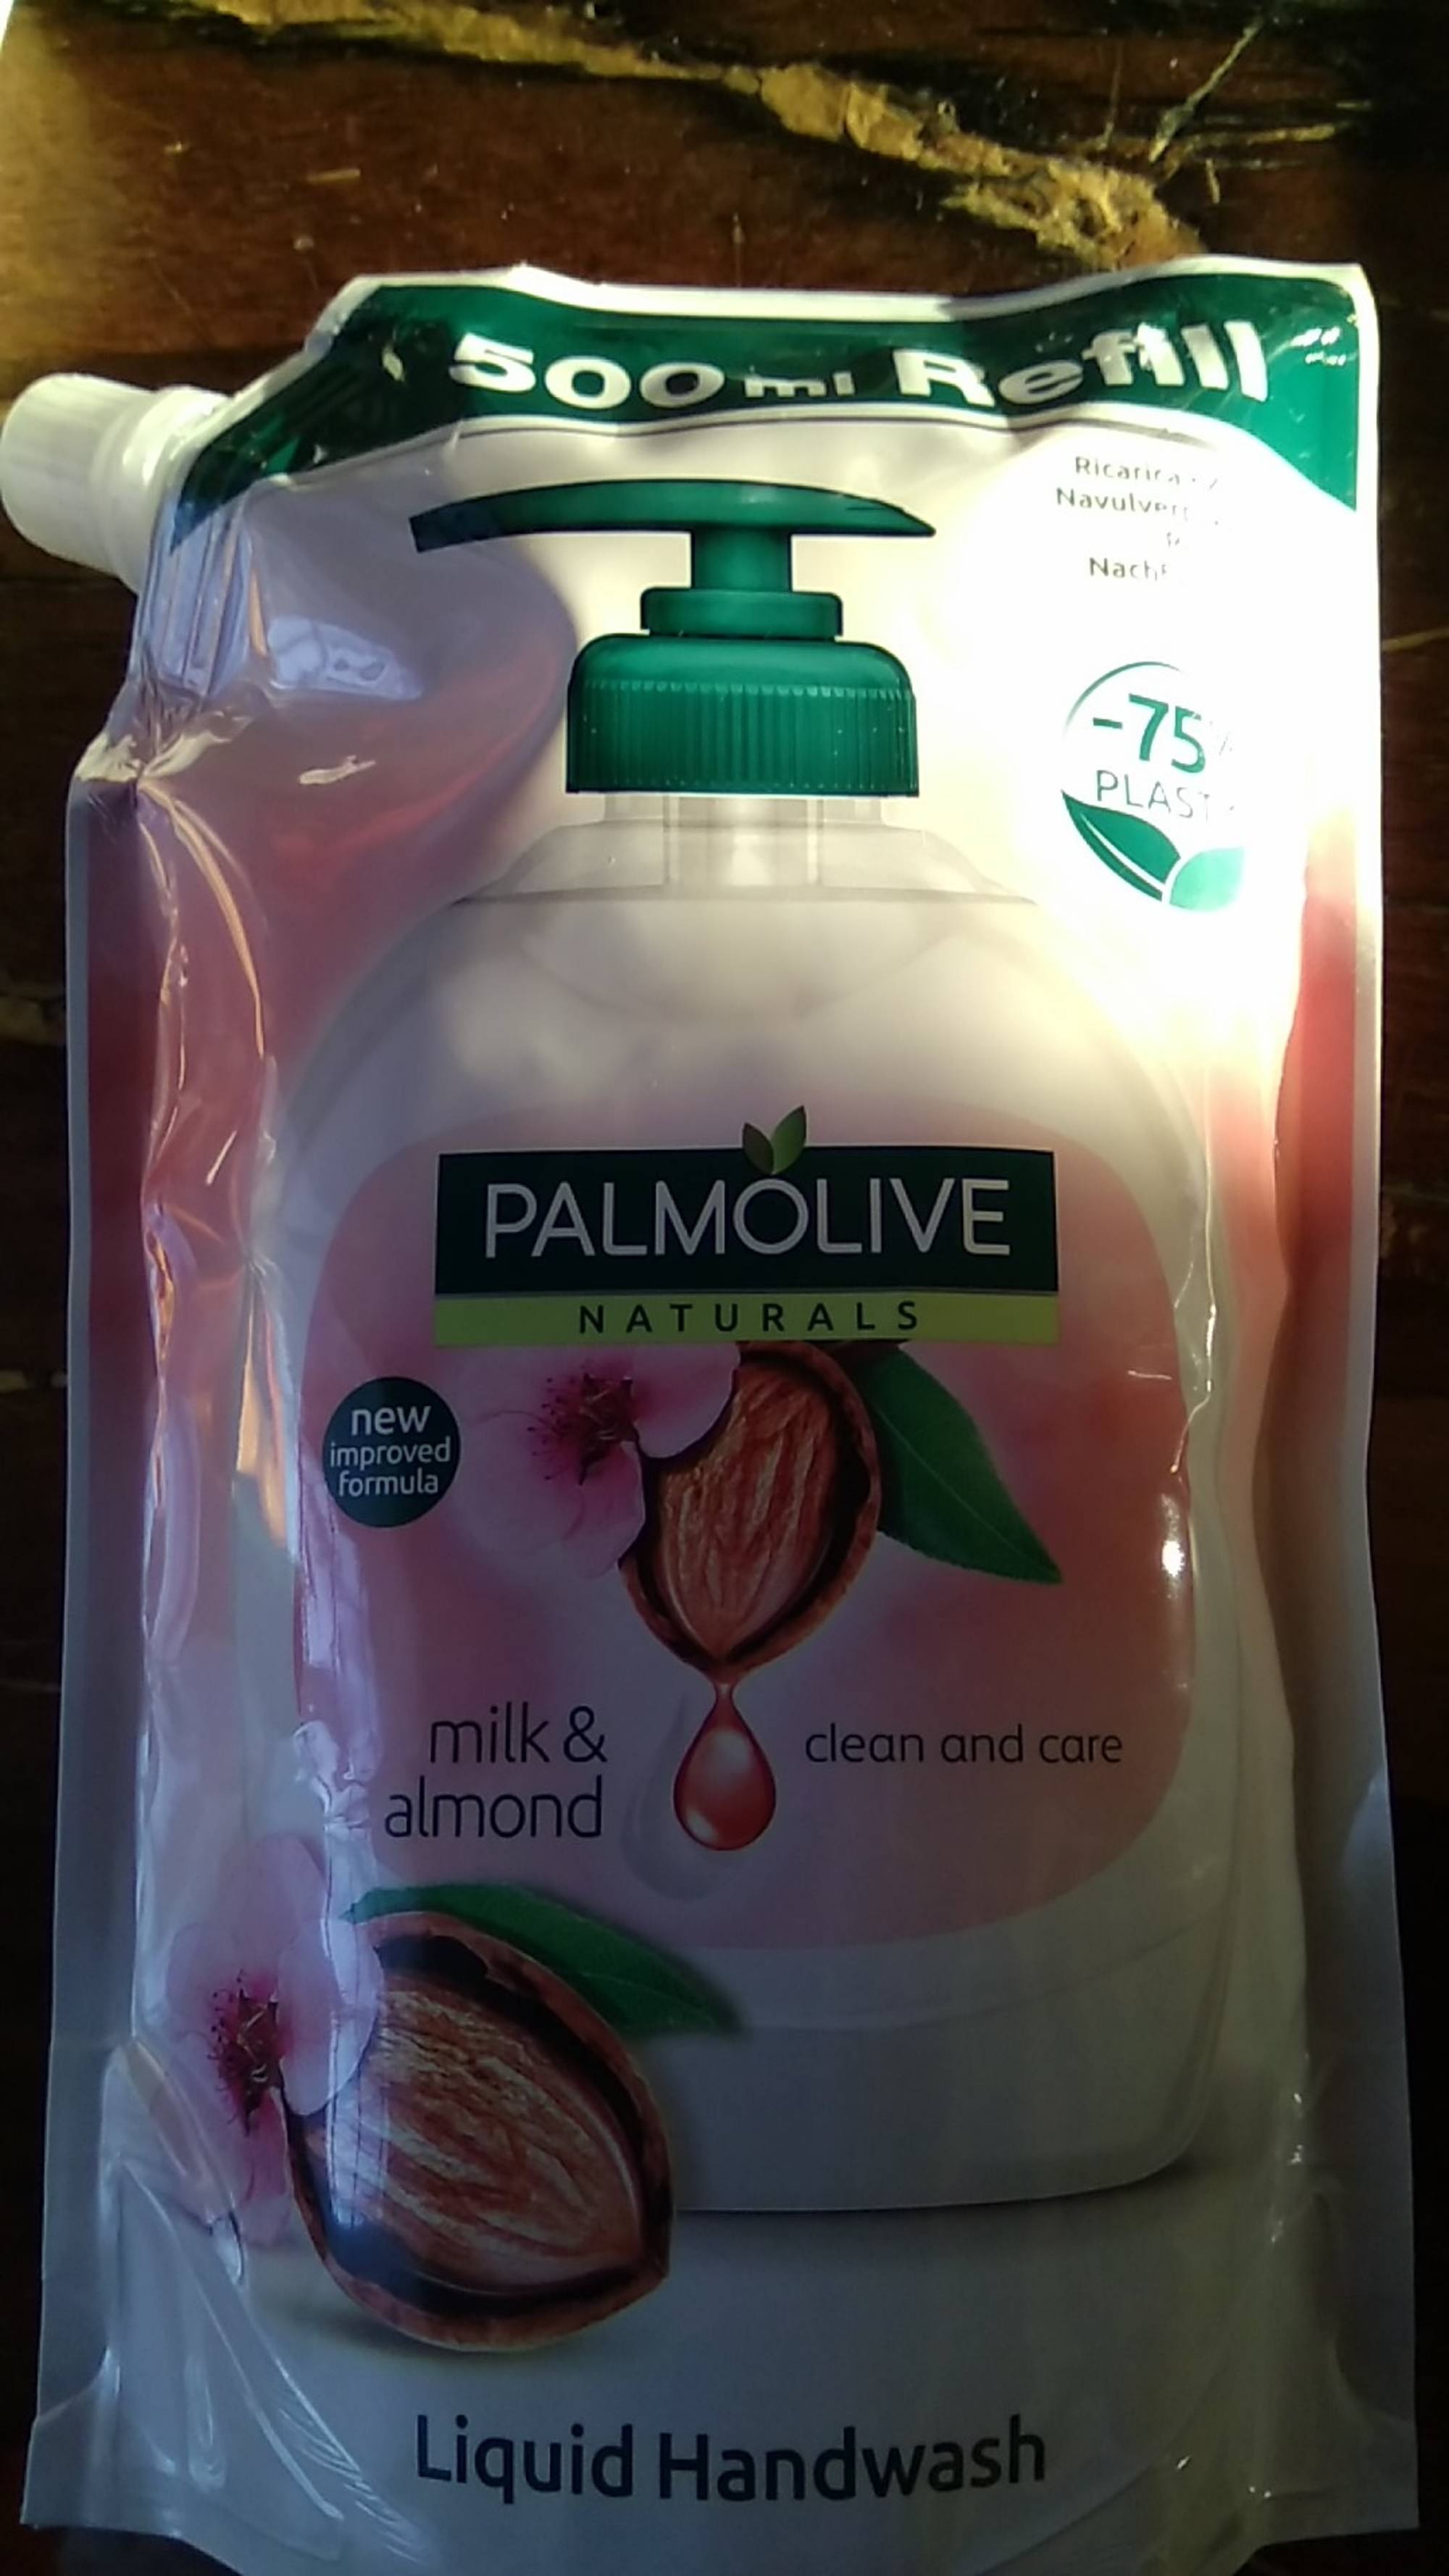 PALMOLIVE - Milk & almond - Liquid handwash